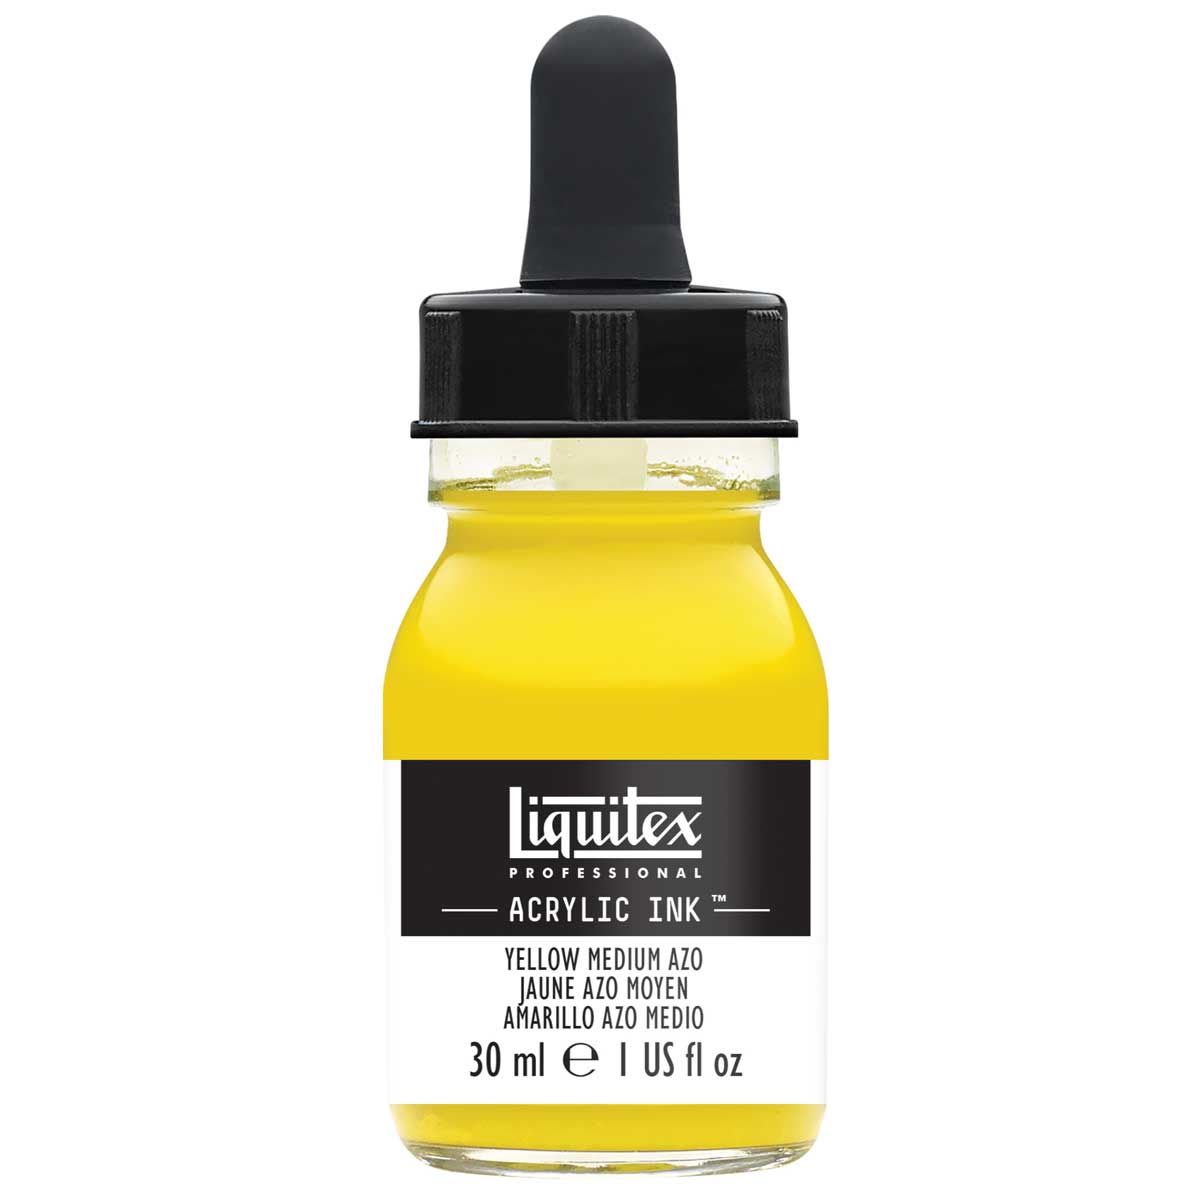 Liquitex Professional Acrylic Ink - Yellow Medium Azo 30ml/1oz